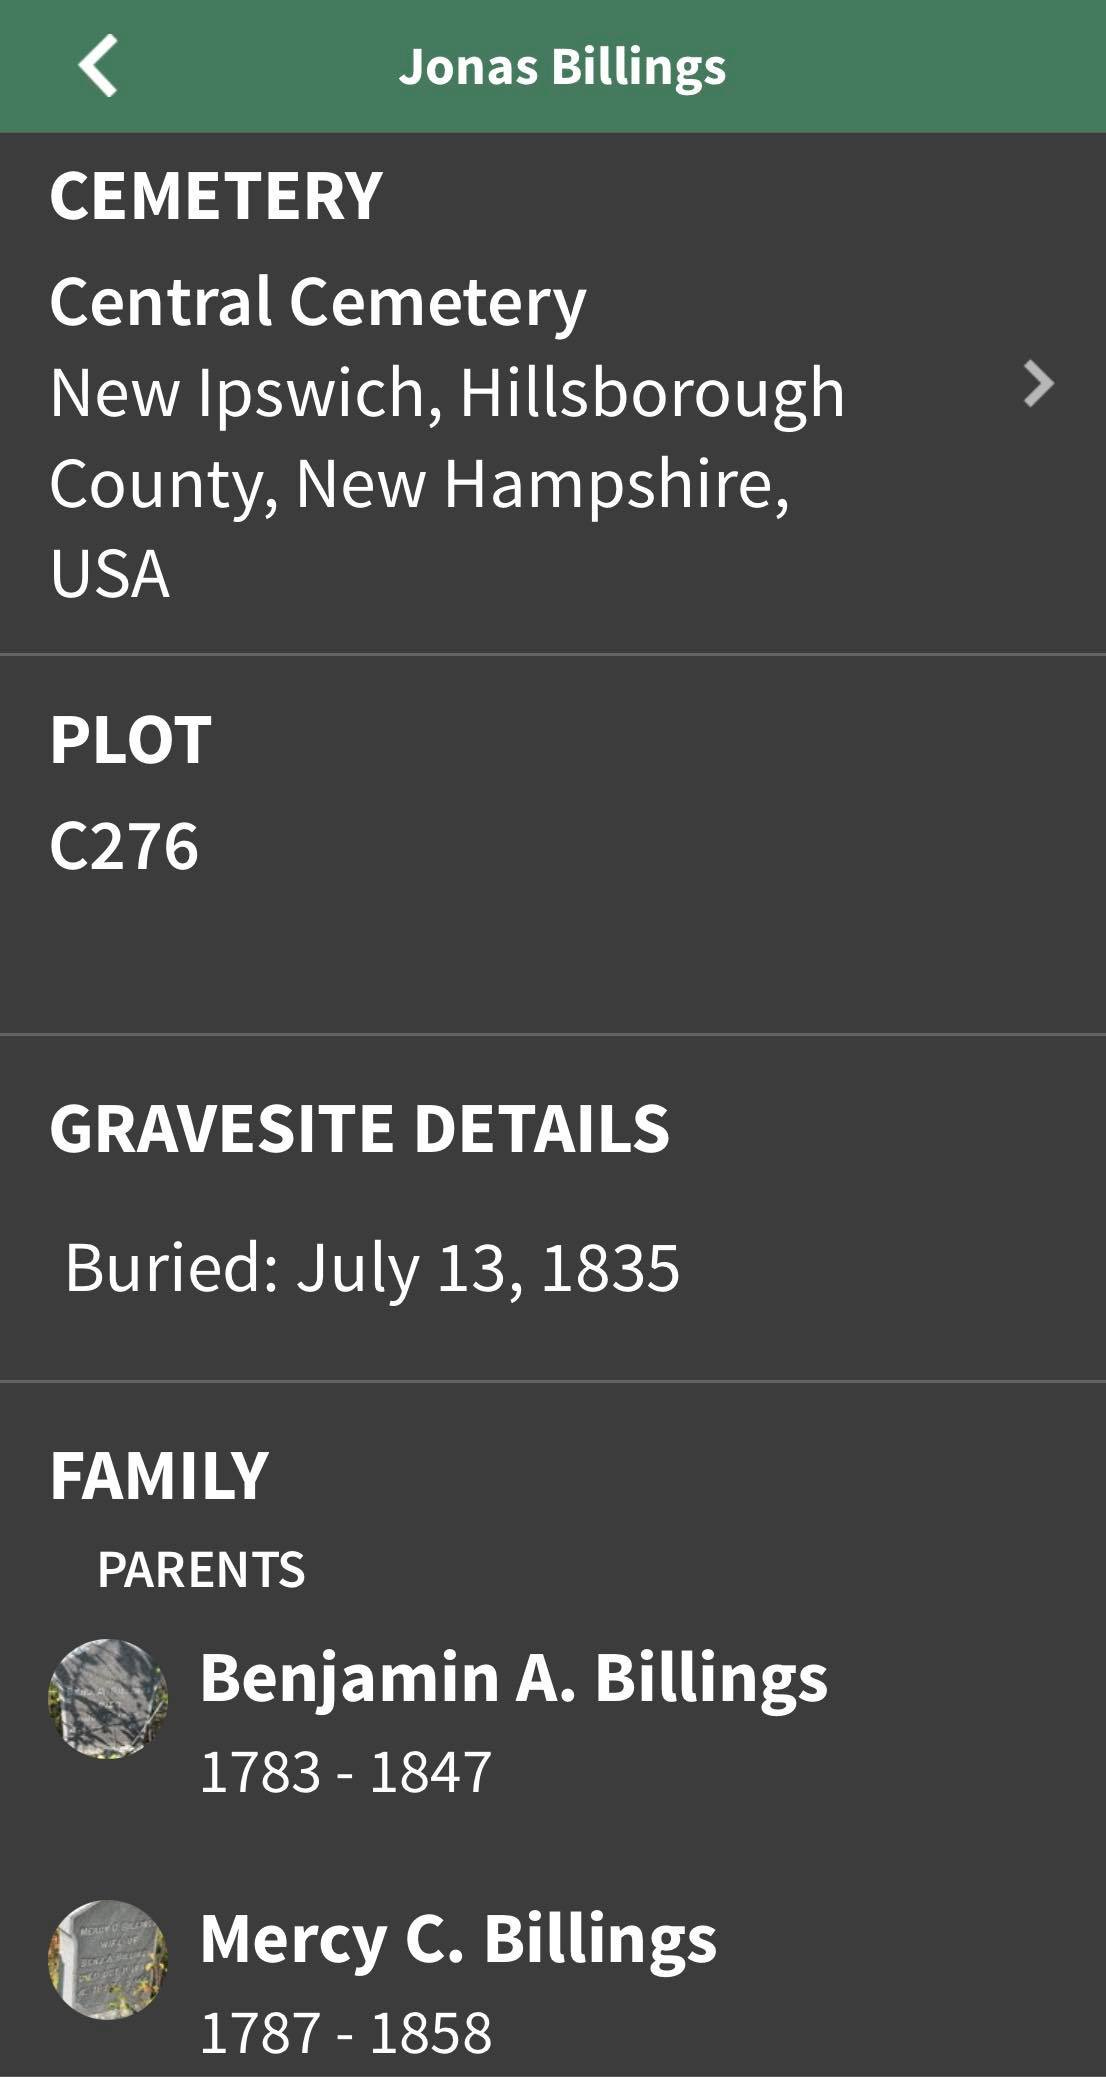 Jonas Billings gravesite details